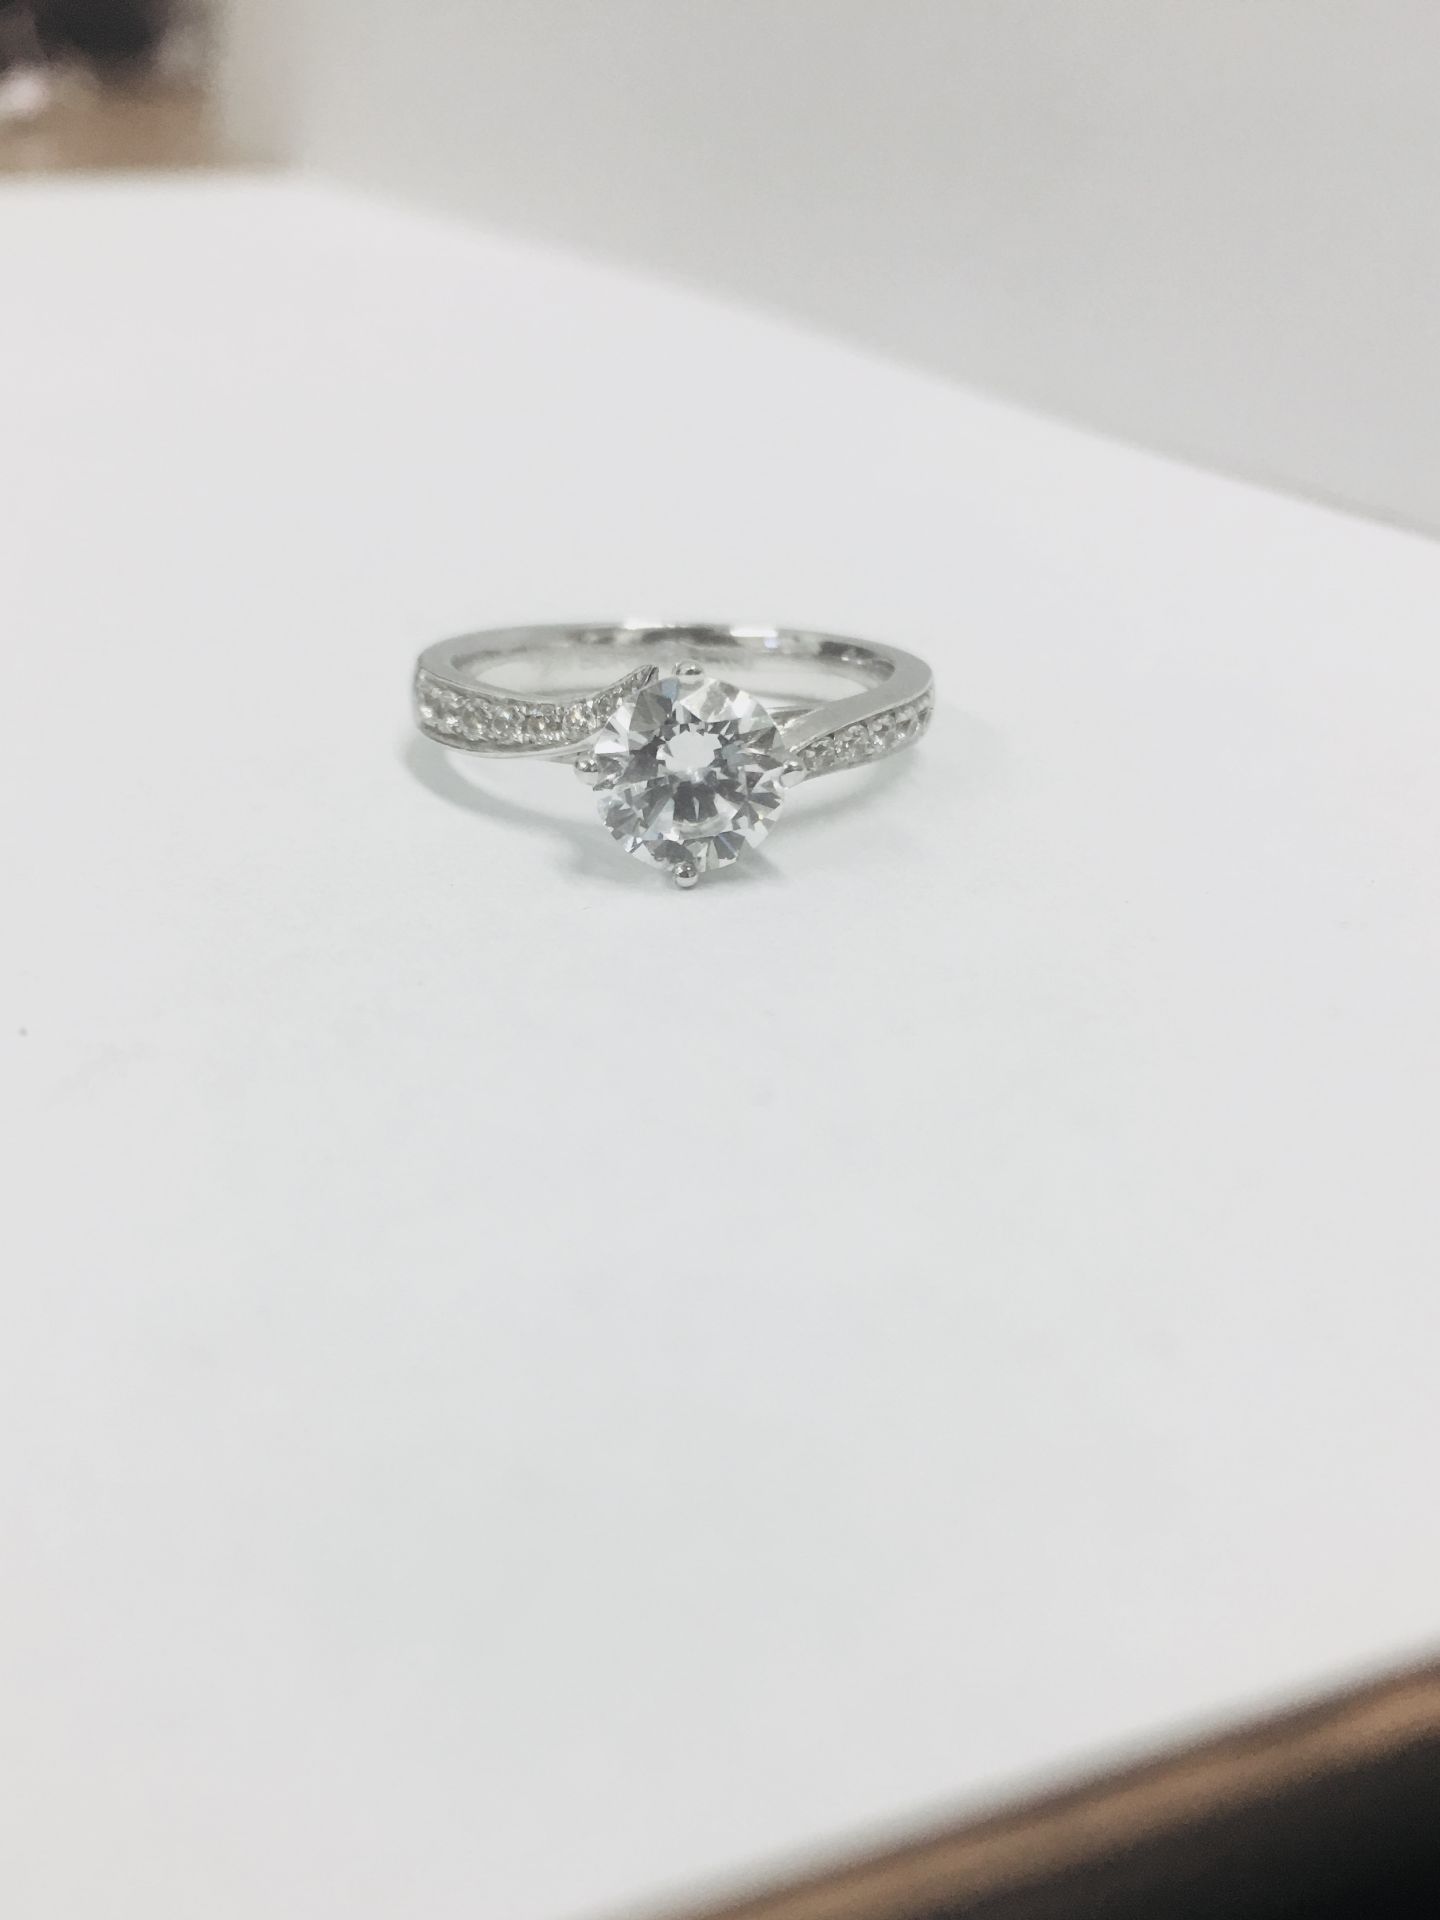 Platinum twist diamond solitaire ring,0.50ct brilliant cut diamond,D colour vs clarity,,3.5 gms